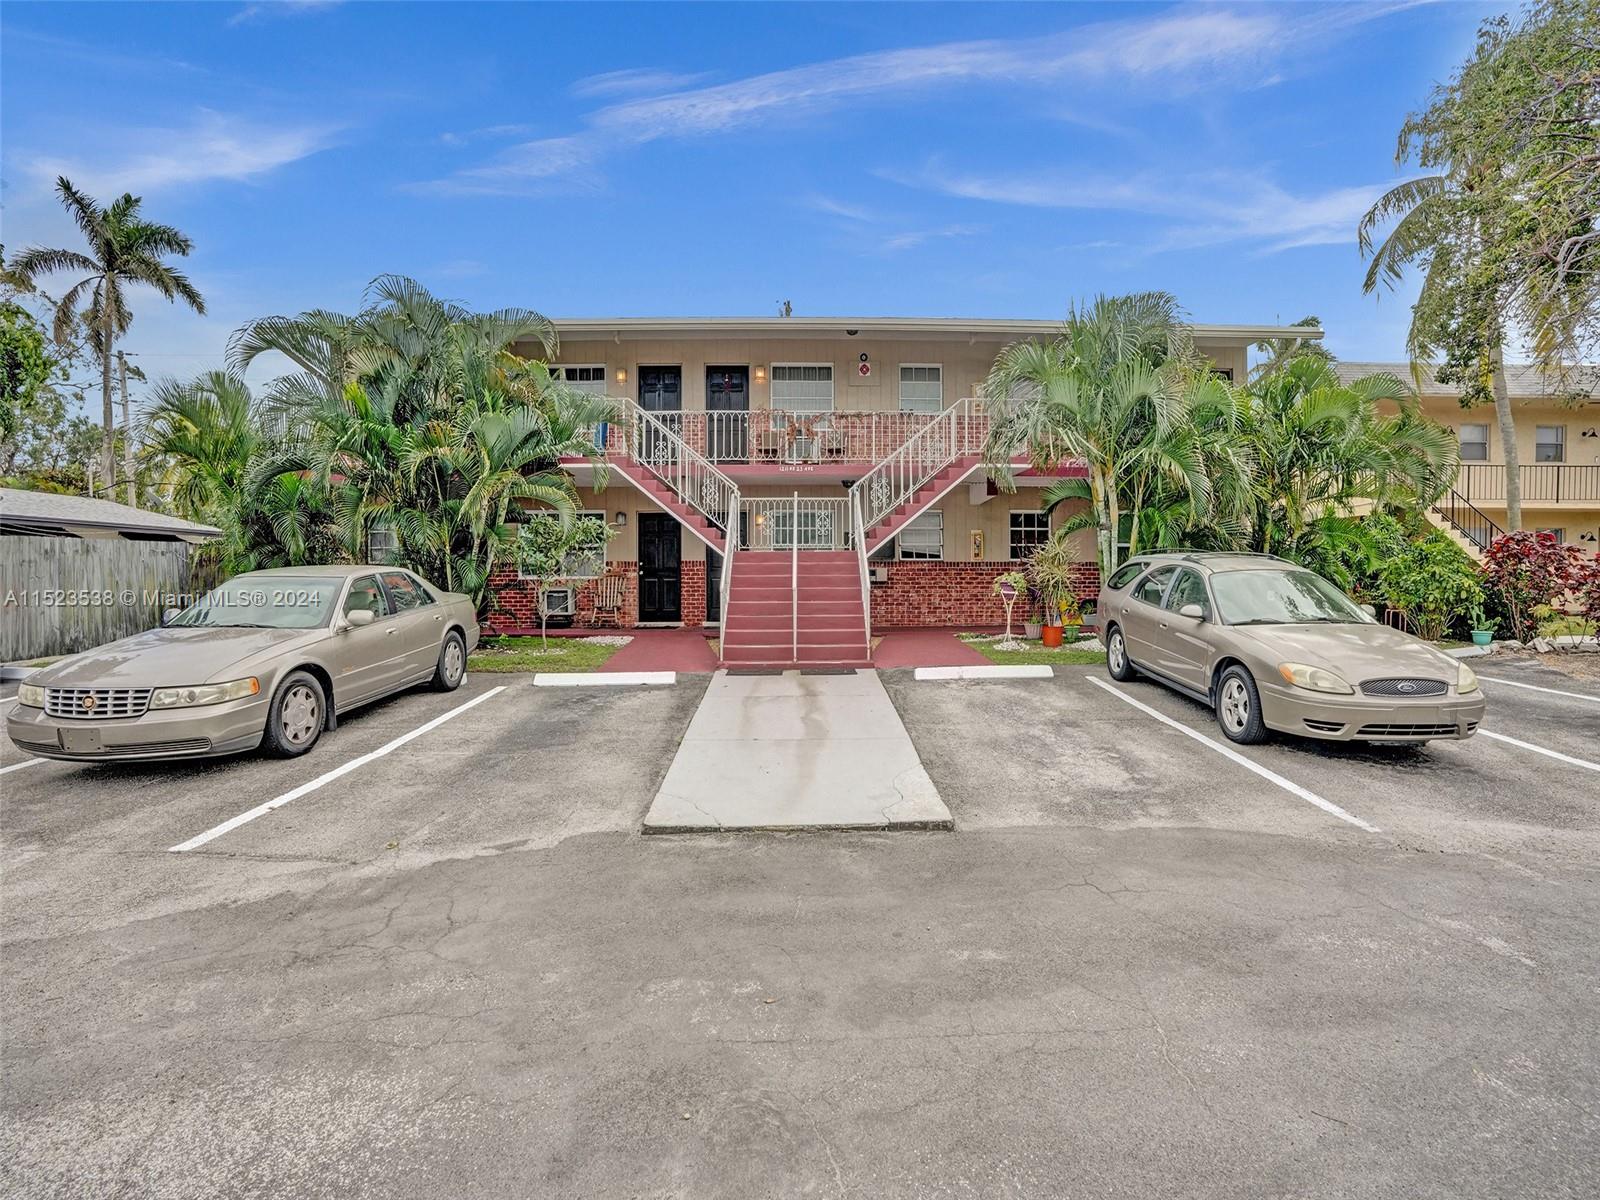 Rental Property at 1211 Ne 23rd Ave, Pompano Beach, Broward County, Florida -  - $1,950,000 MO.